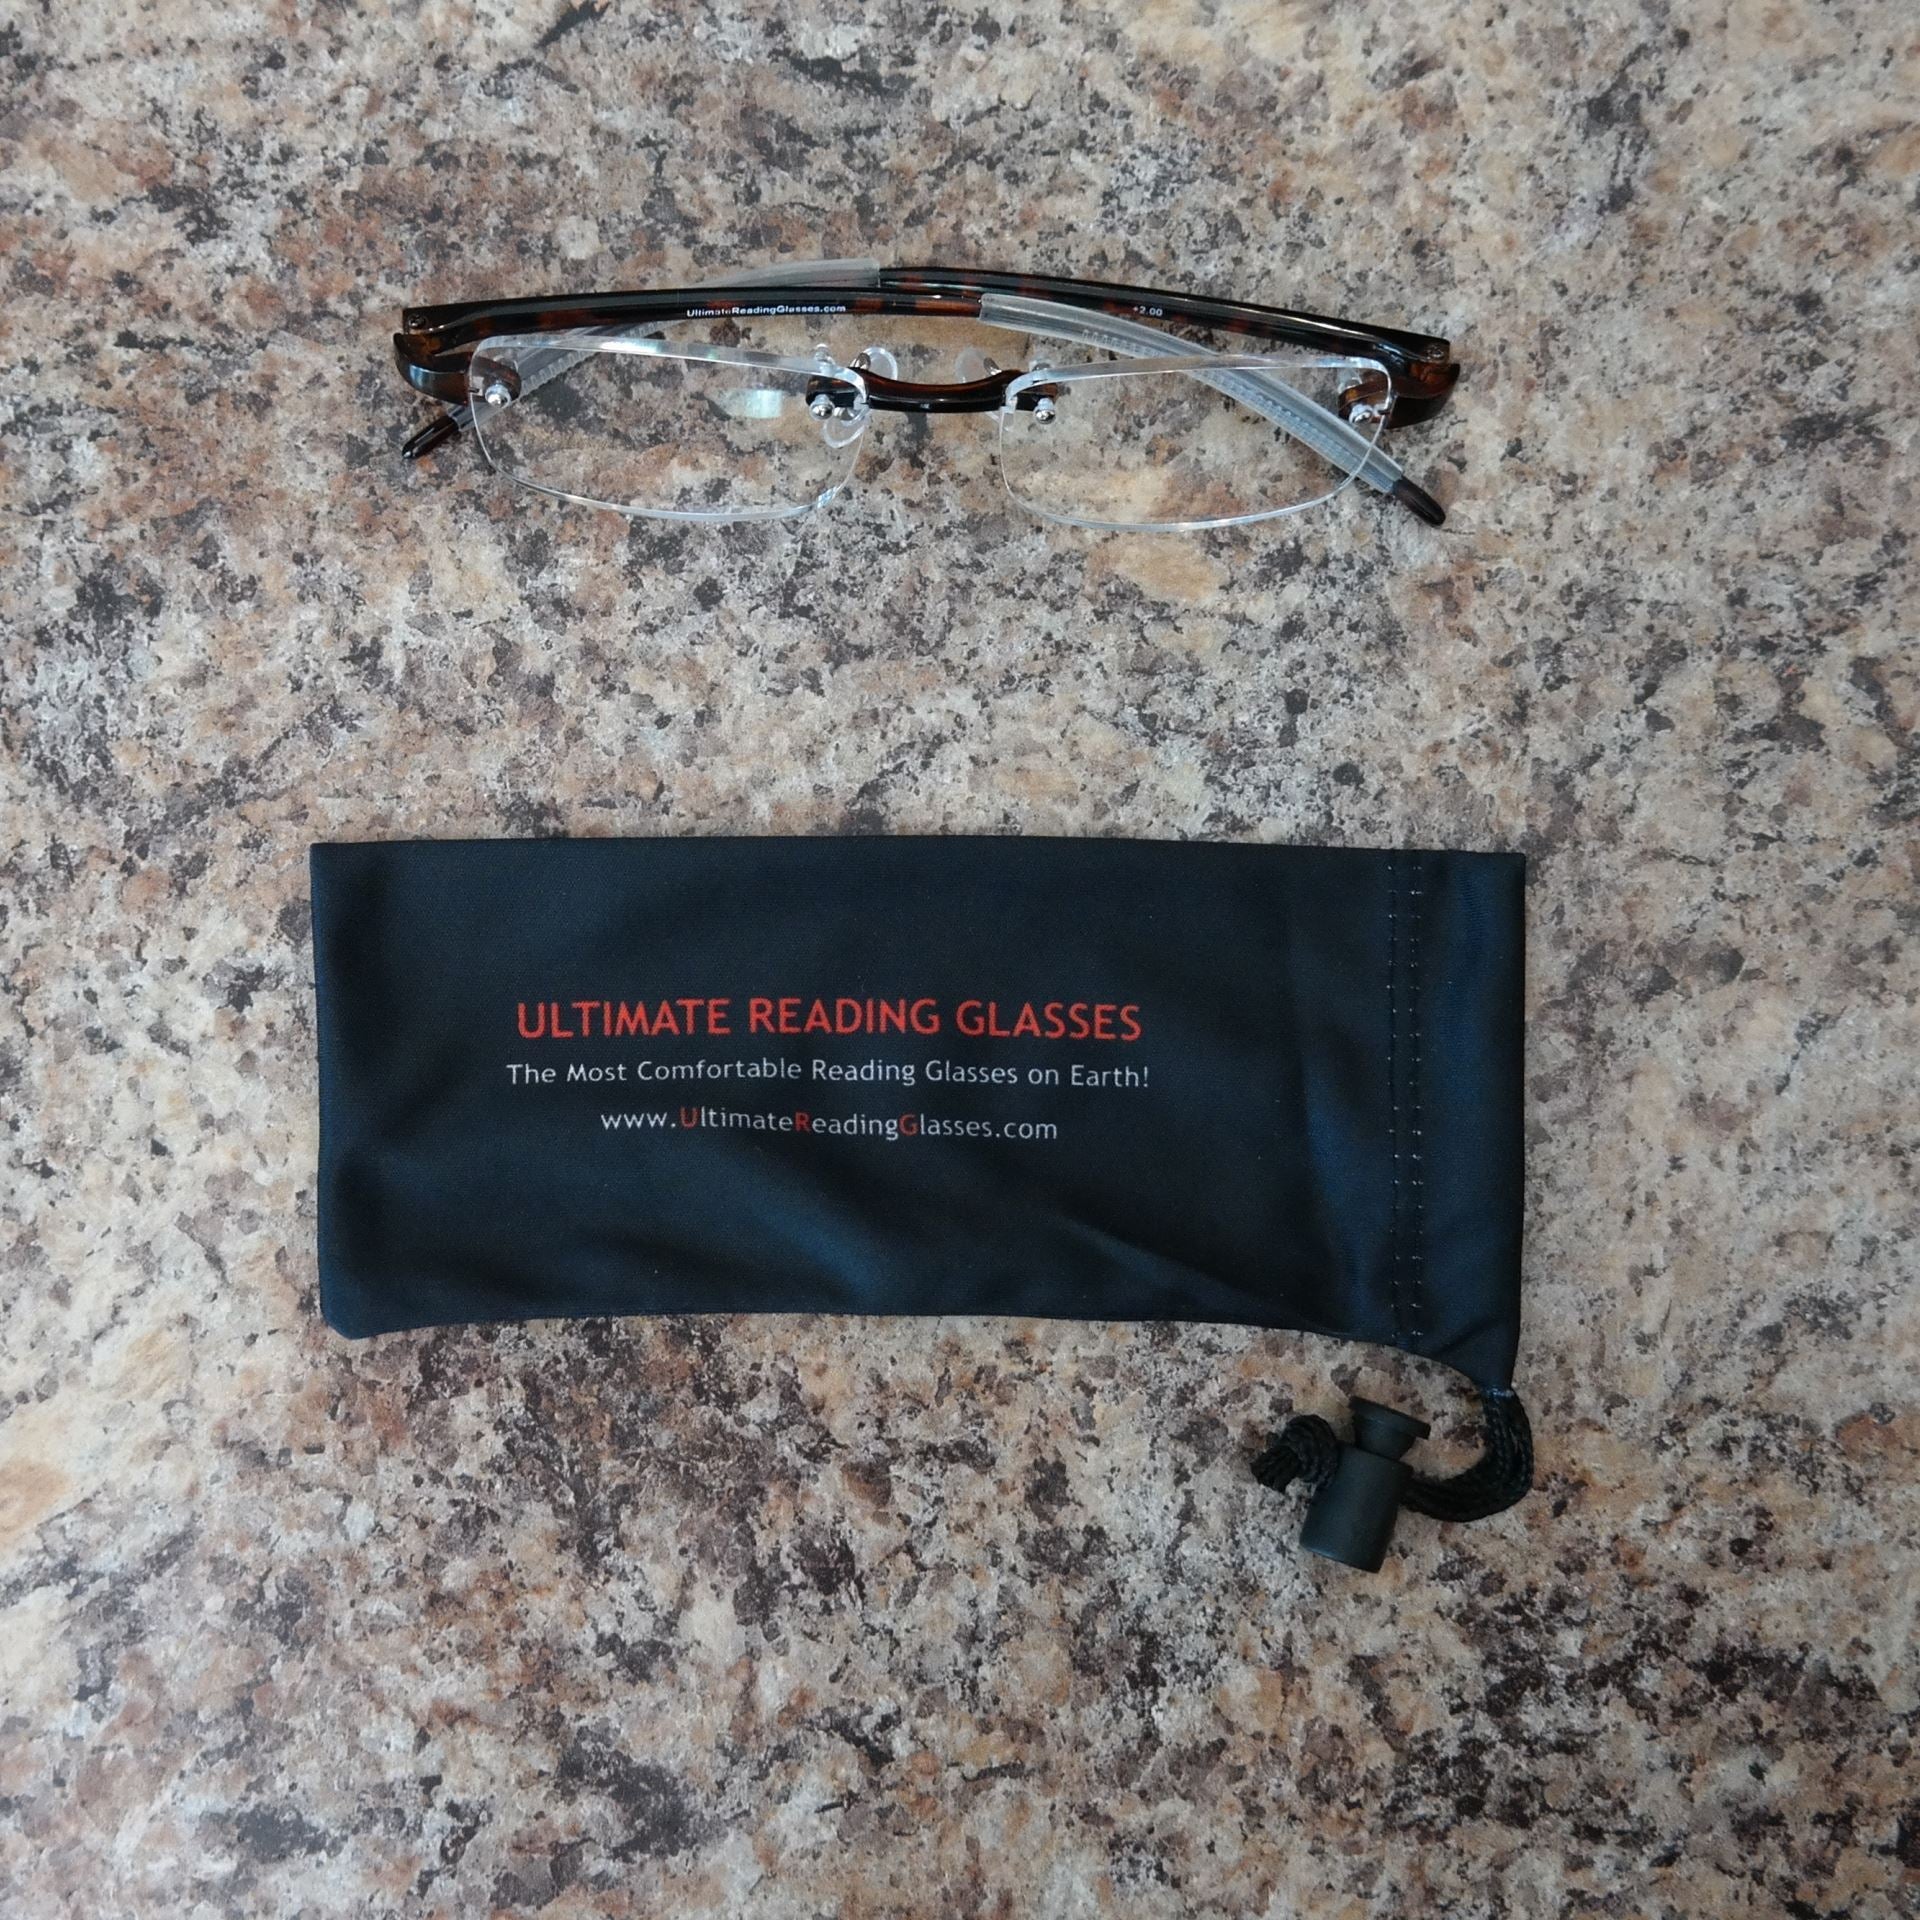 Ultimate Reading Glasses soft case